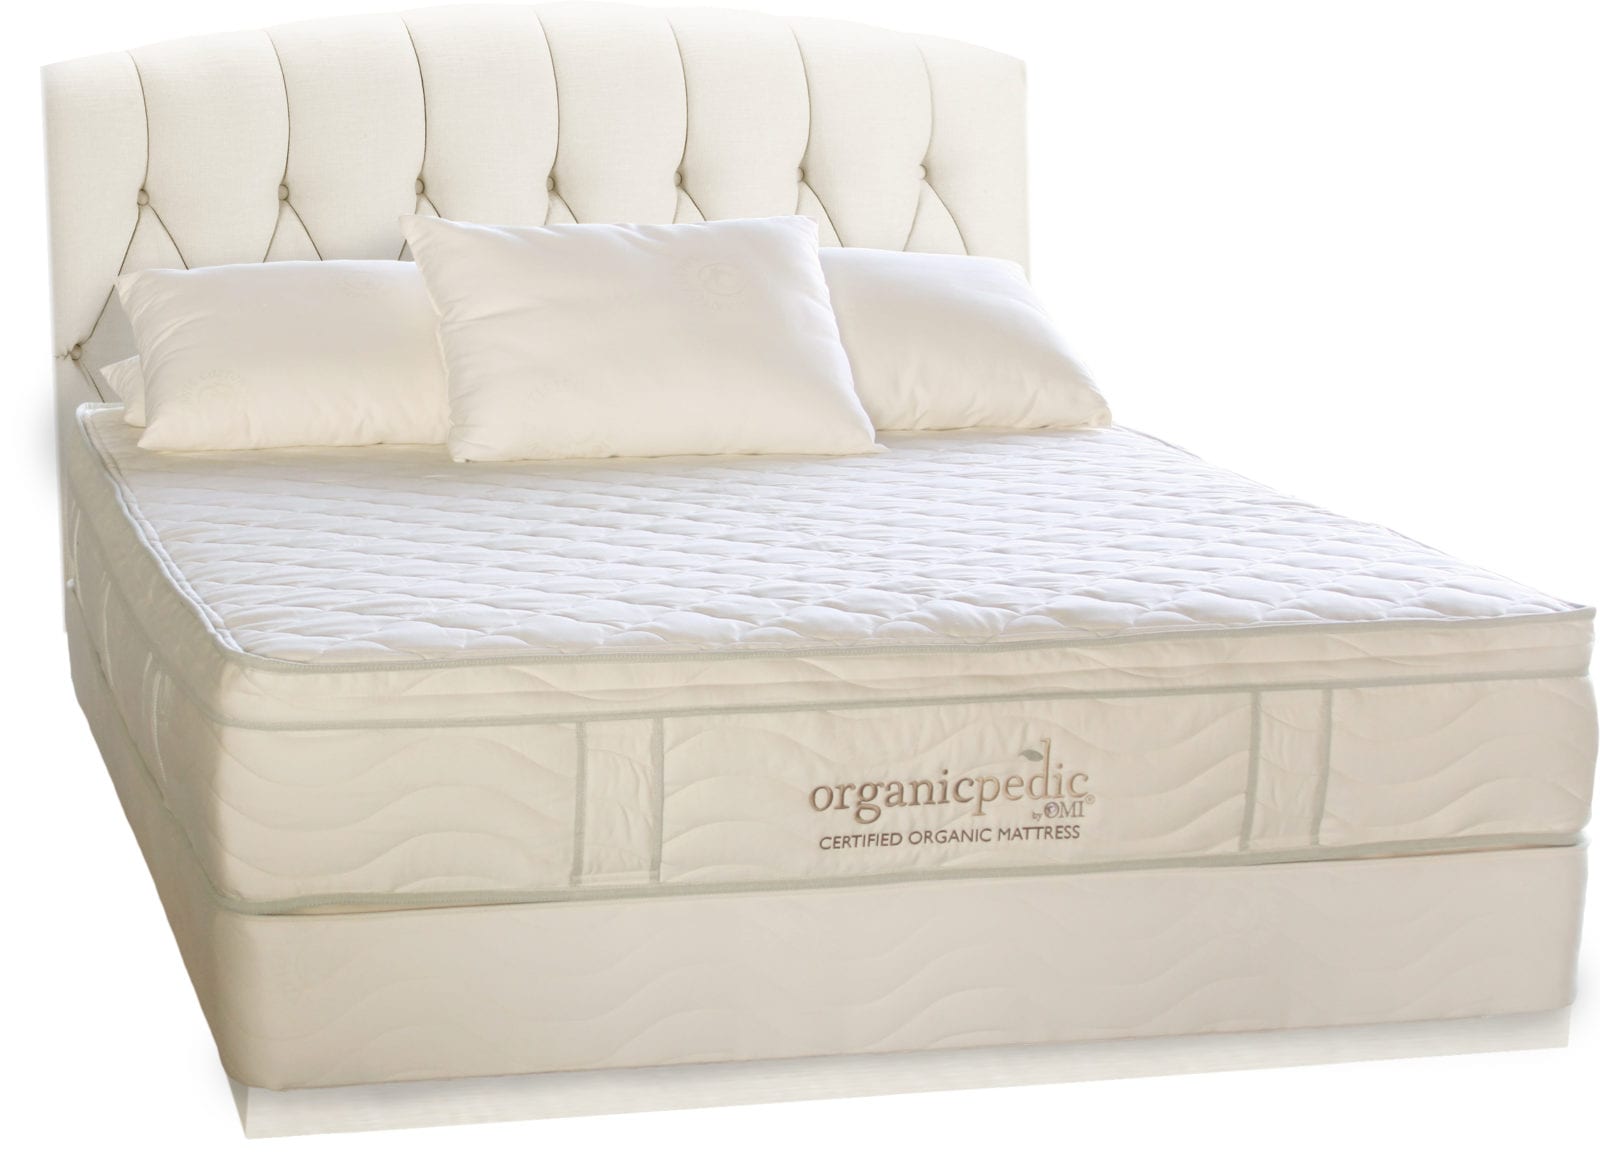 omi mattress hide a bed